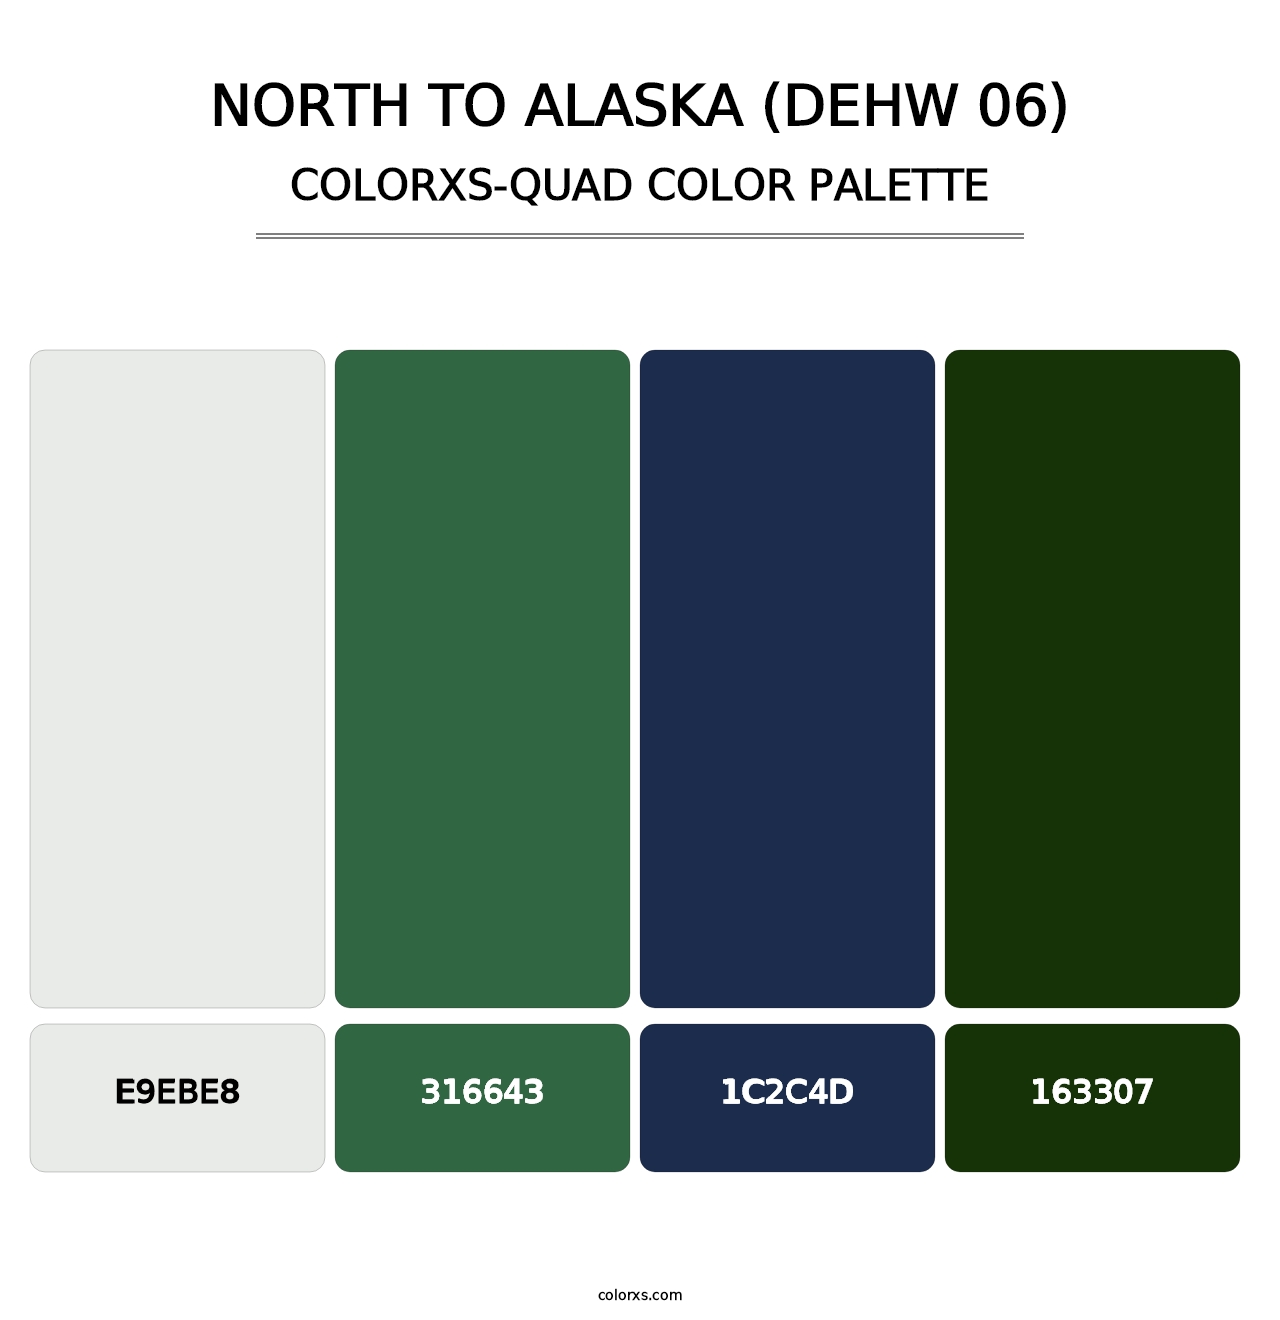 North To Alaska (DEHW 06) - Colorxs Quad Palette